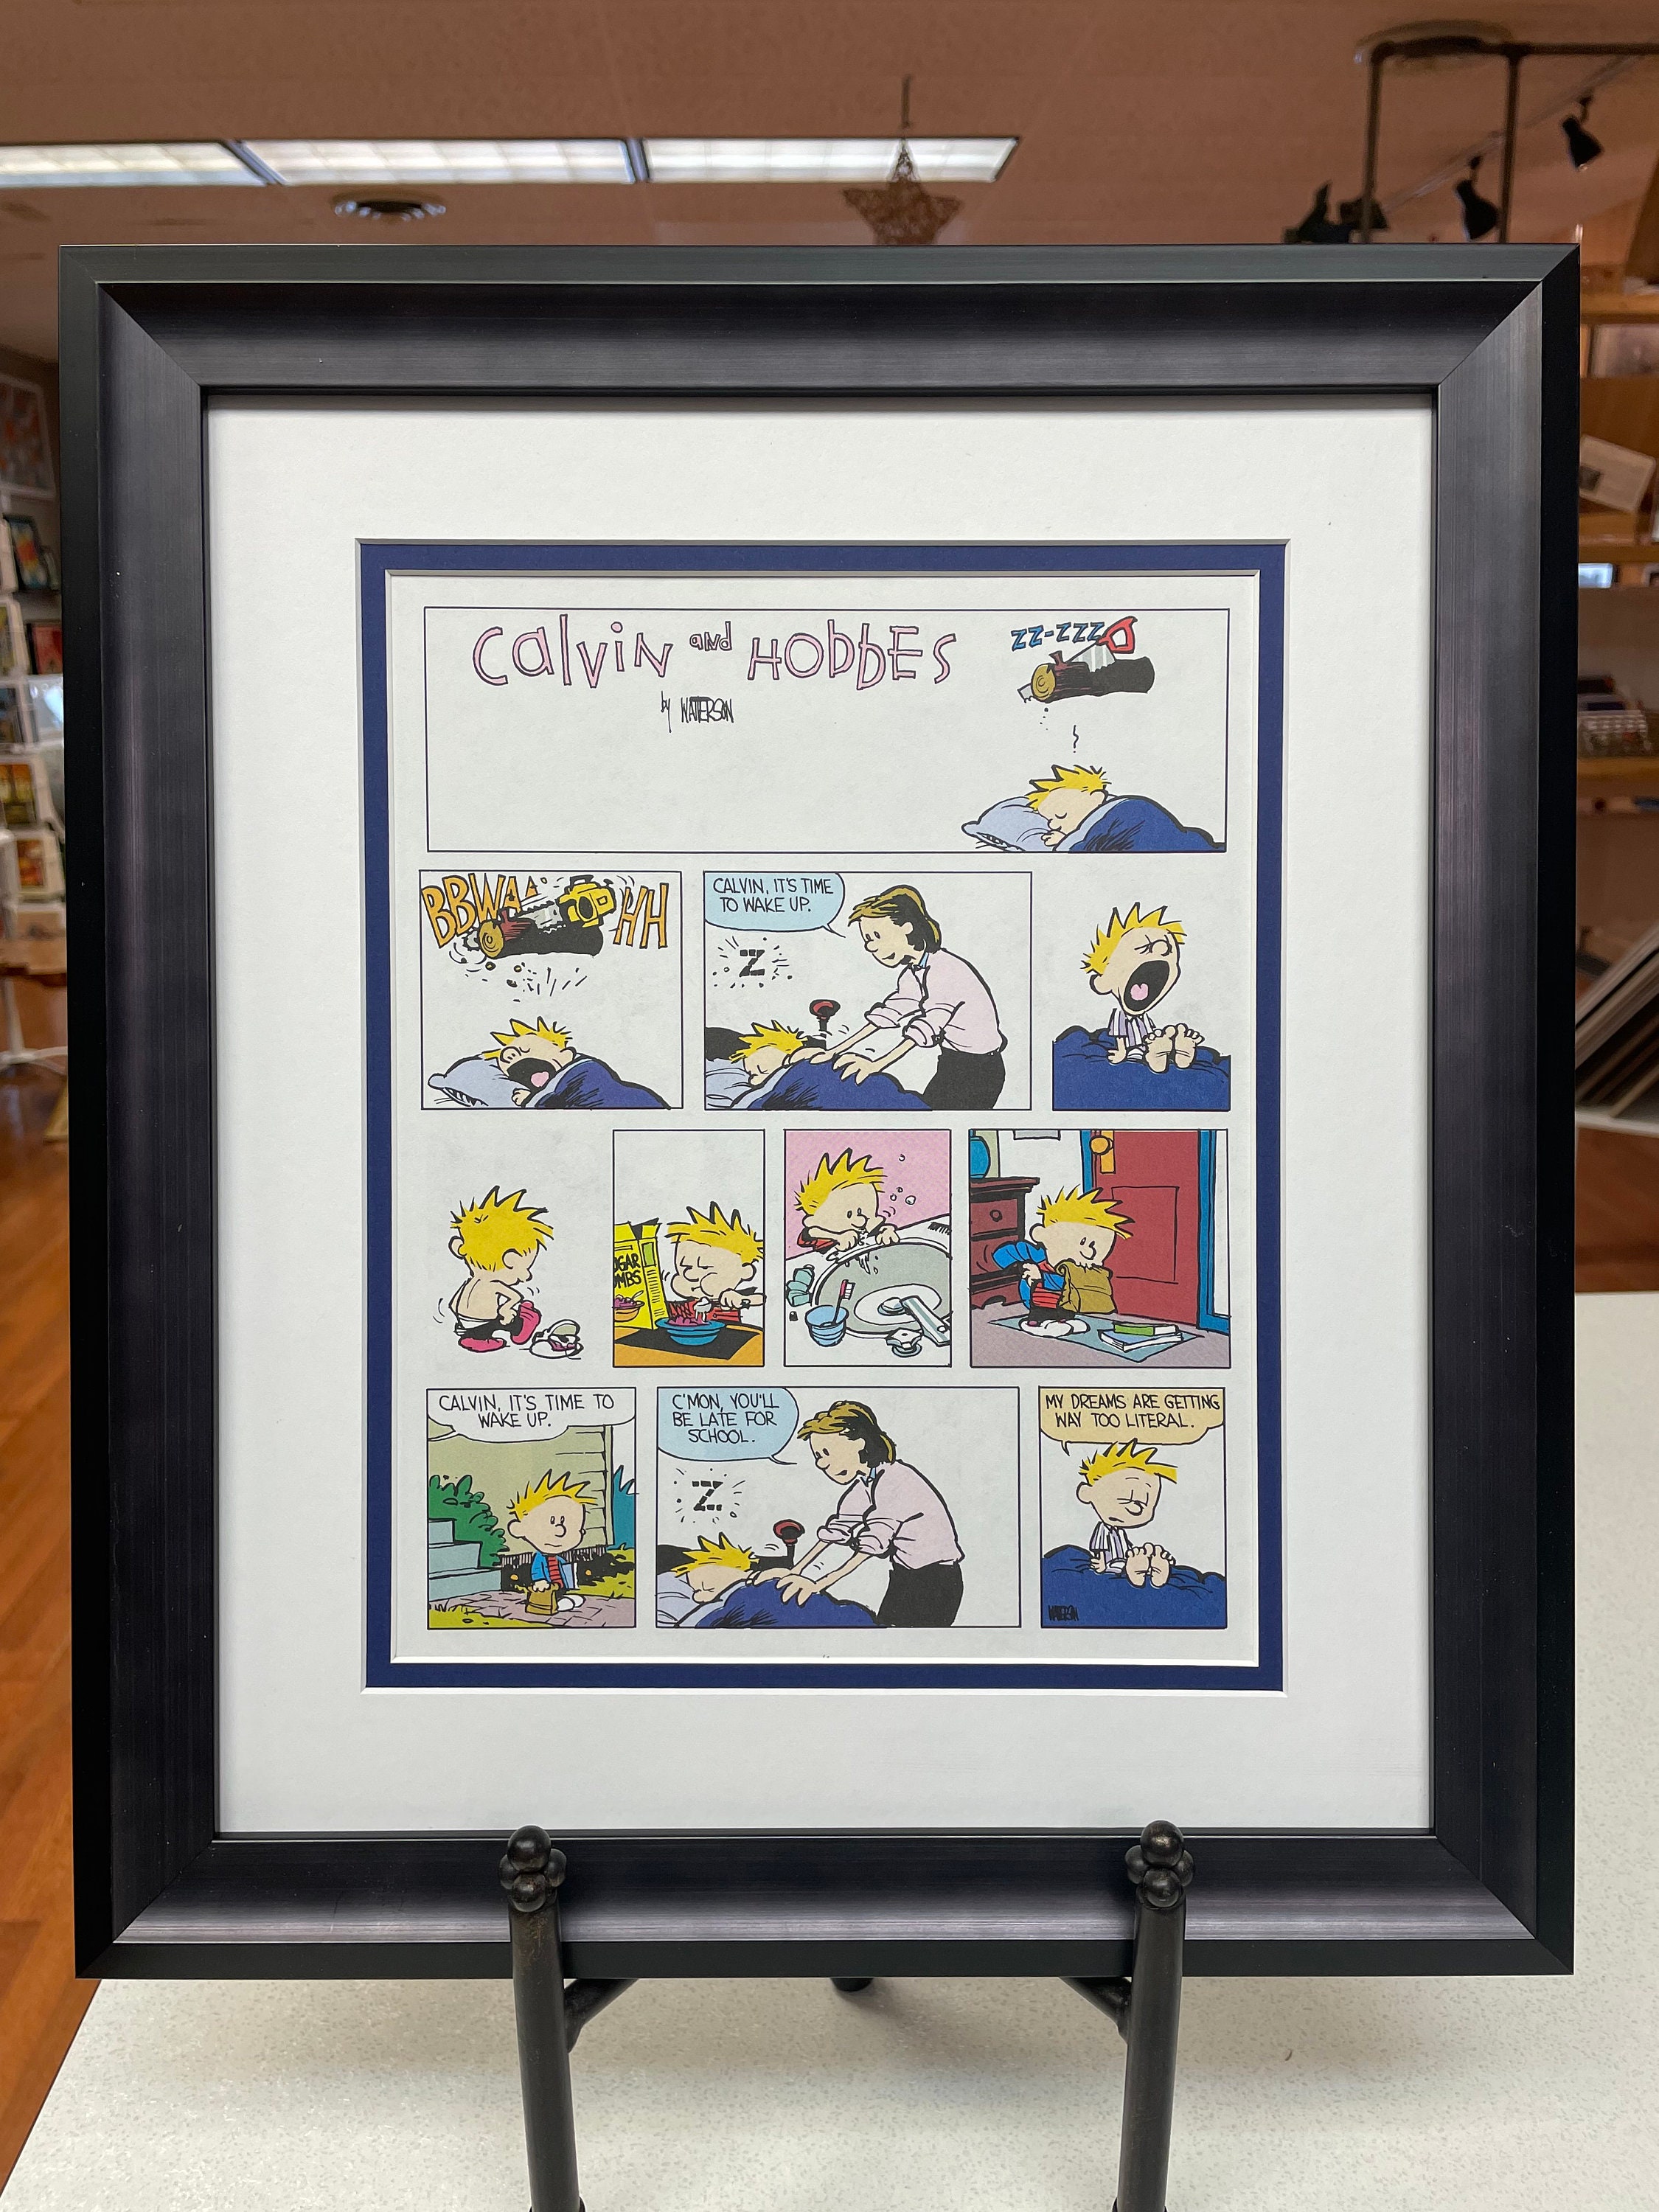 Calvin and hobbes final strip framed